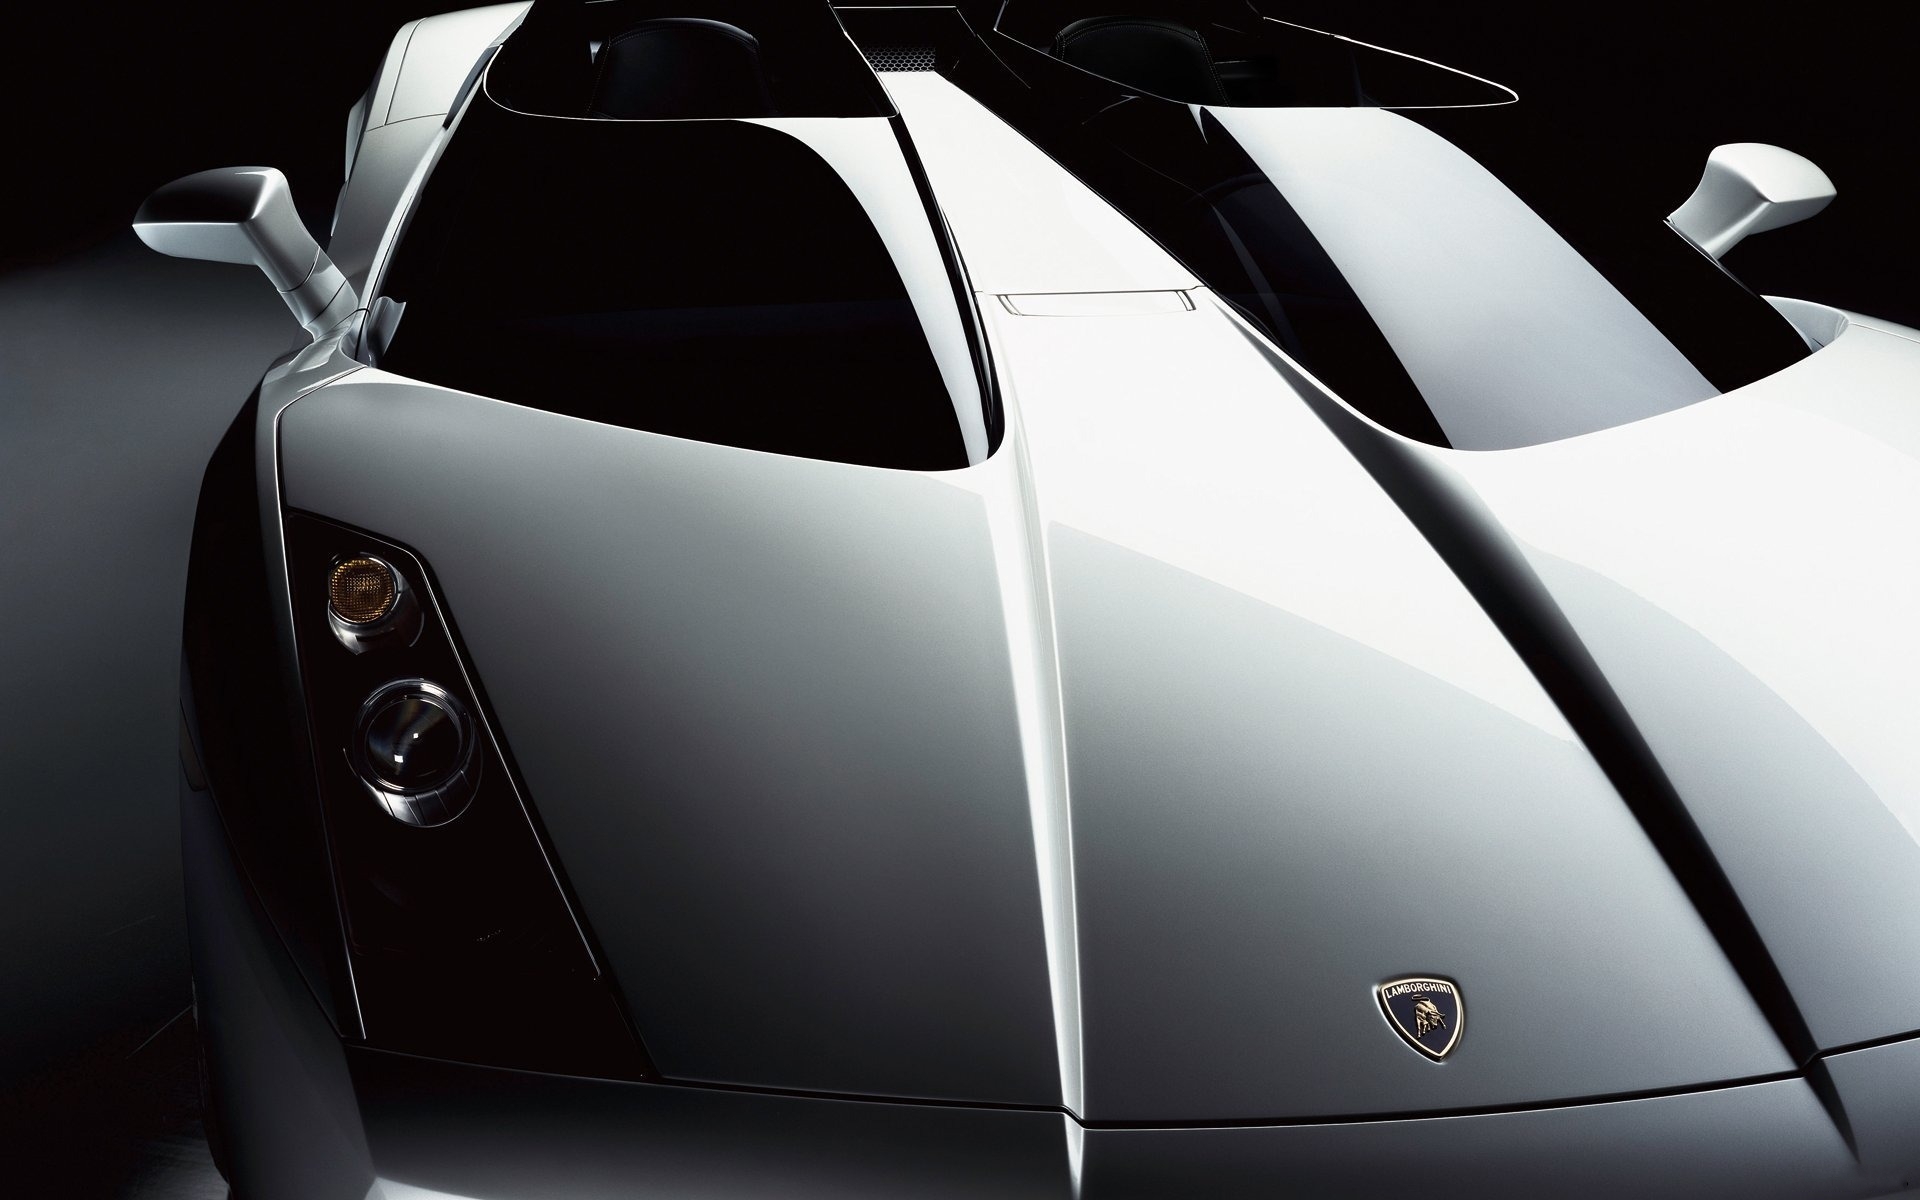 Завантажити шпалери Lamborghini Concept S на телефон безкоштовно